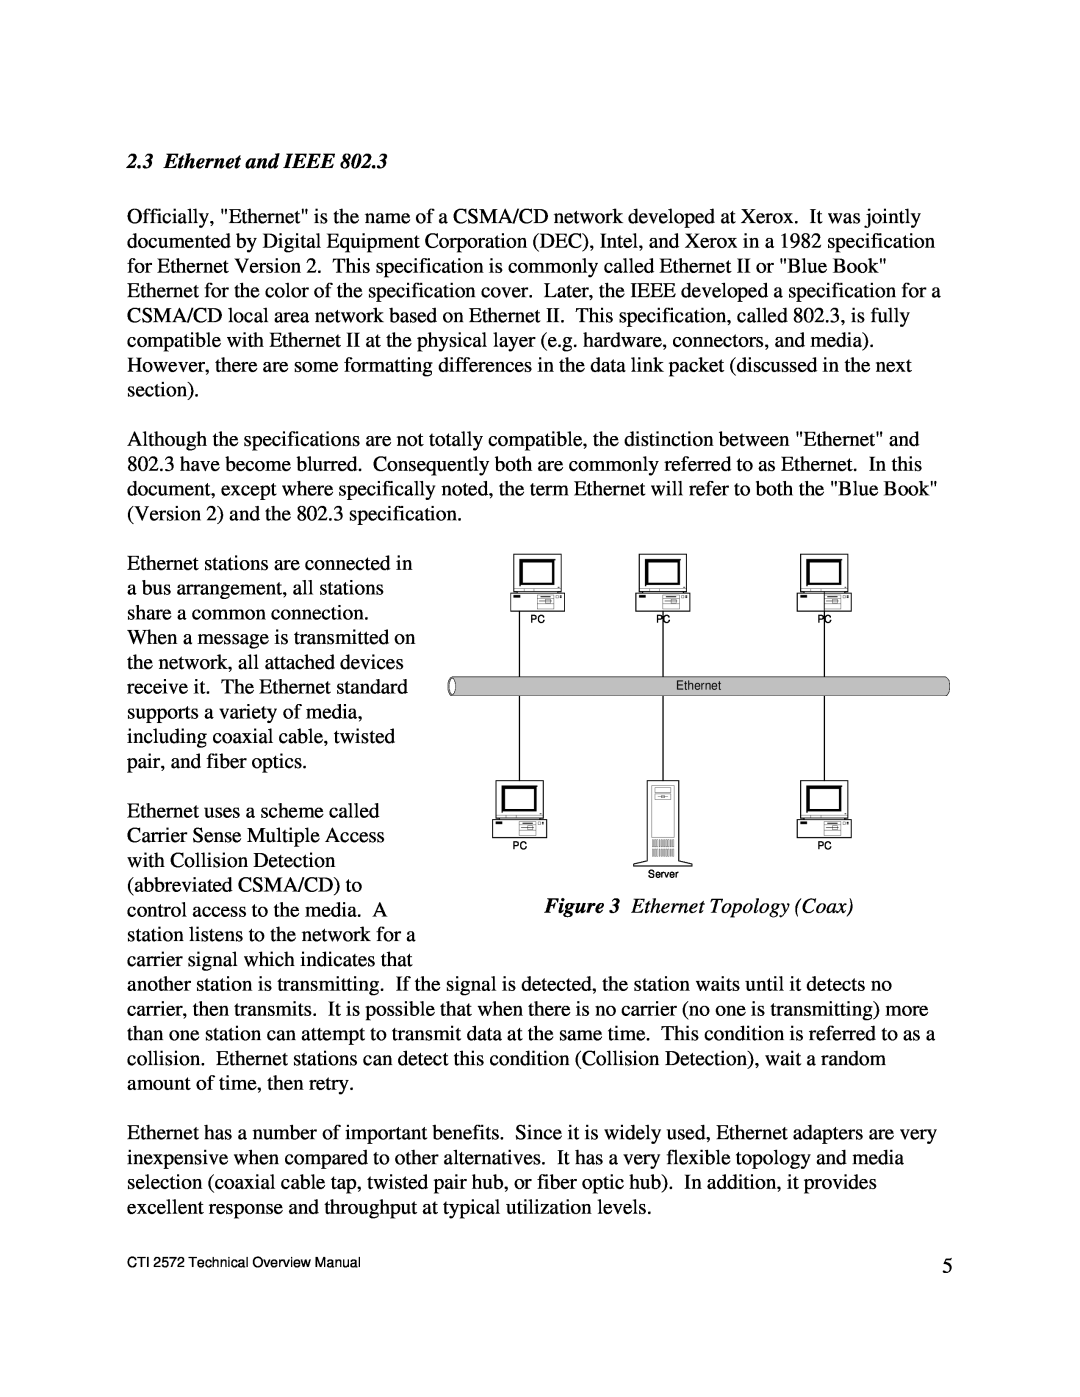 IBM CTI 2572 manual Ethernet and IEEE 